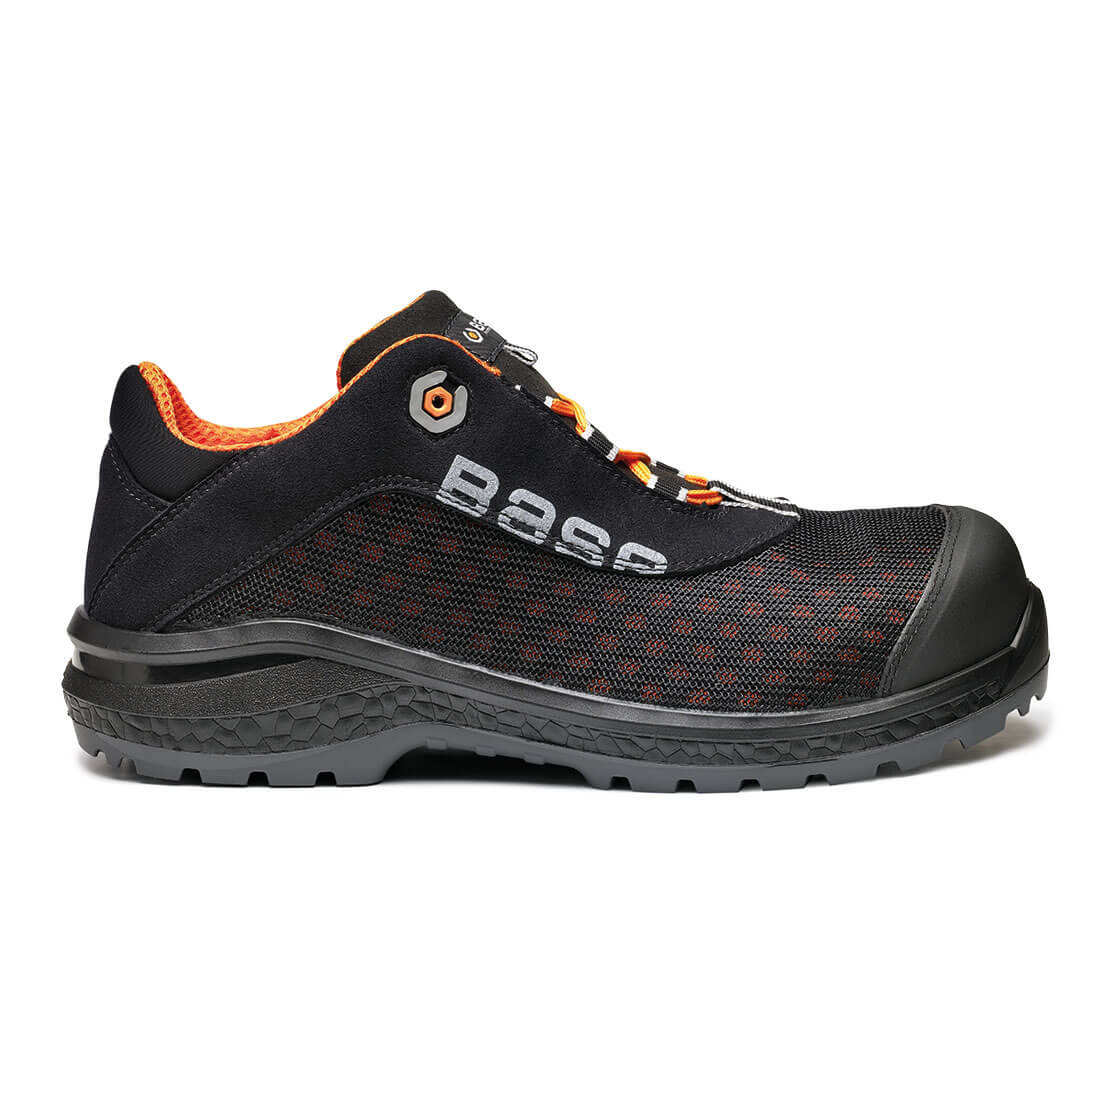 Base Be-Fit Toe Cap Work Safety Shoes Black/Orange 1#colour_black-orange